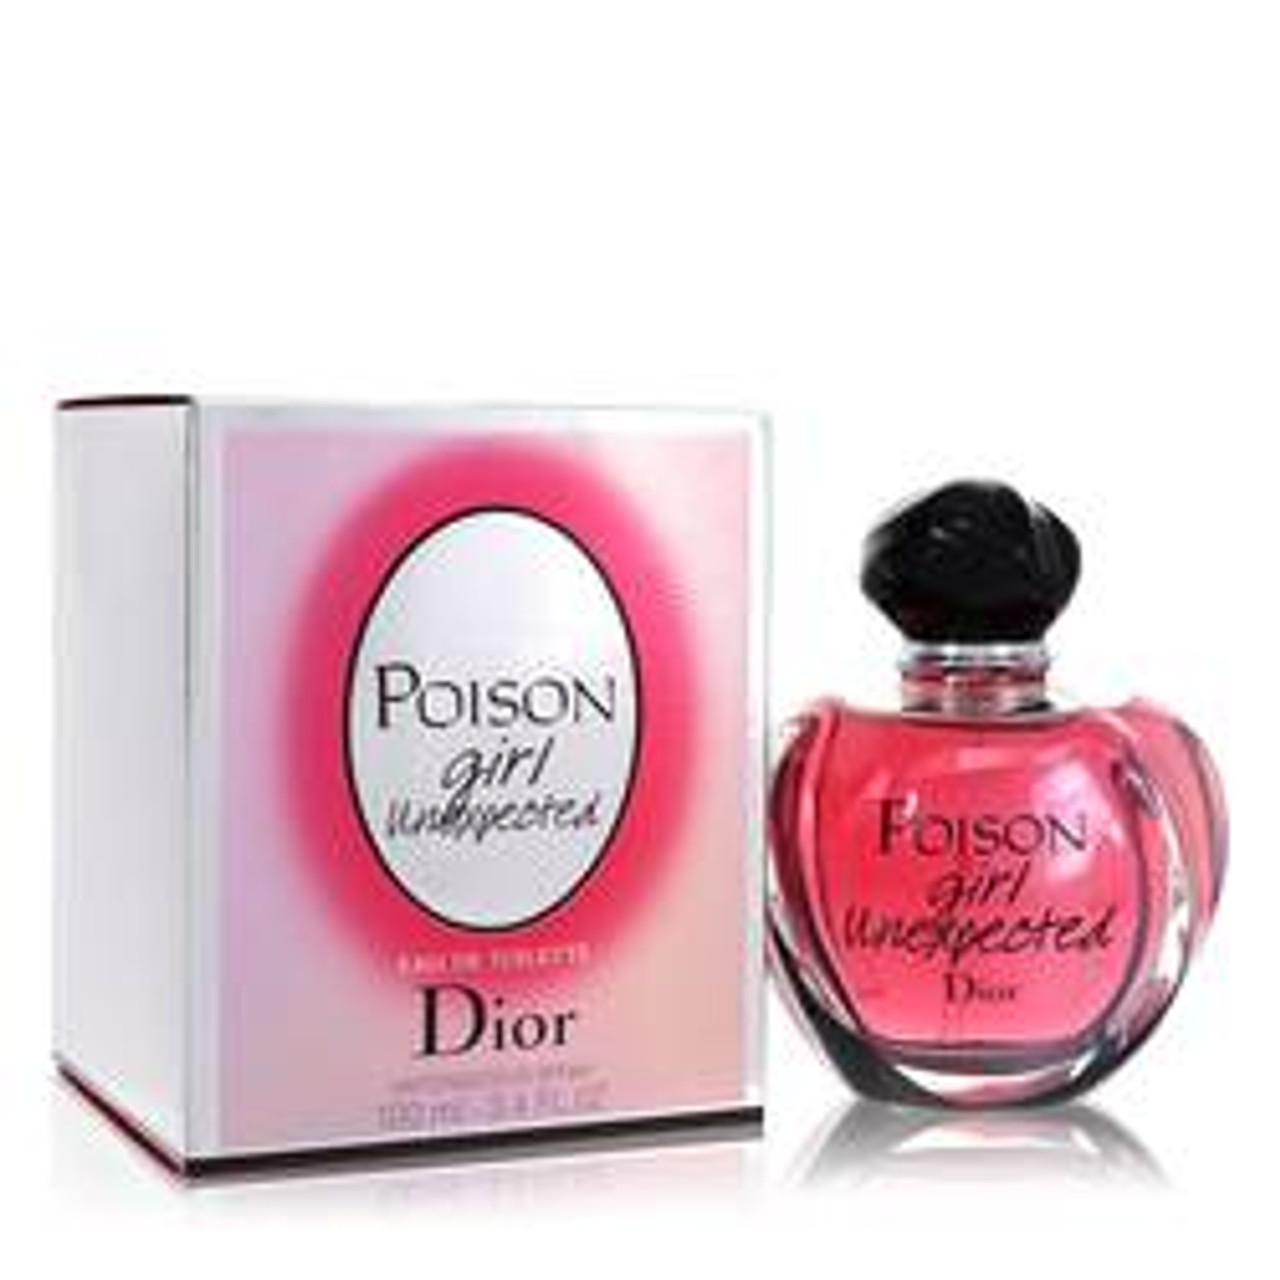 Poison Girl Unexpected Perfume By Christian Dior Eau De Toilette Spray 3.4 oz for Women - *Pre-Order